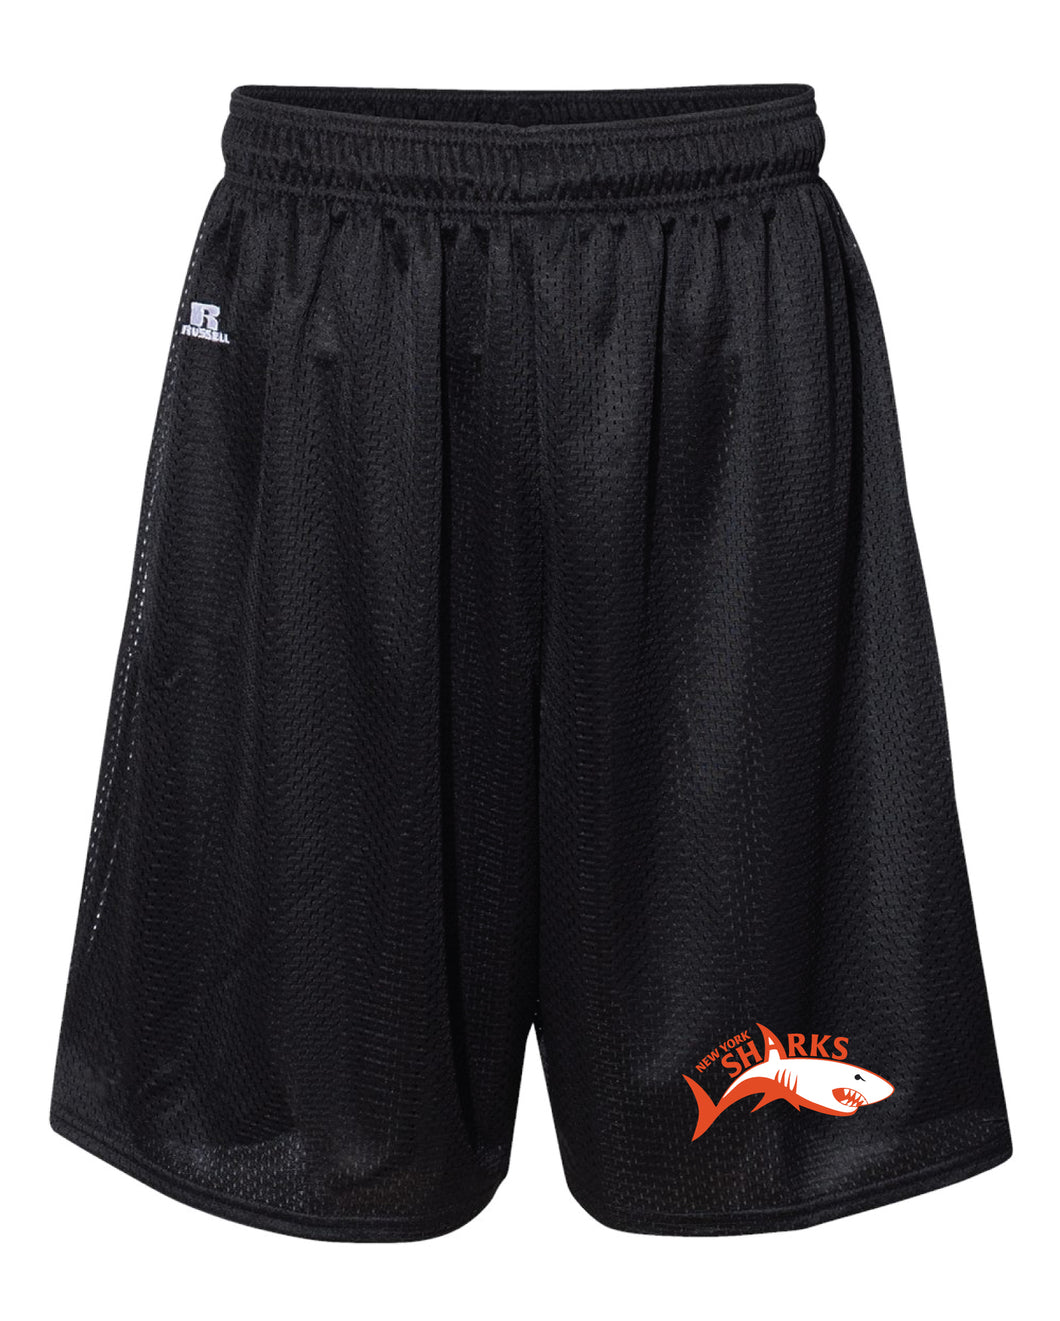 New York Sharks Russell Athletic  Tech Shorts - Black - 5KounT2018